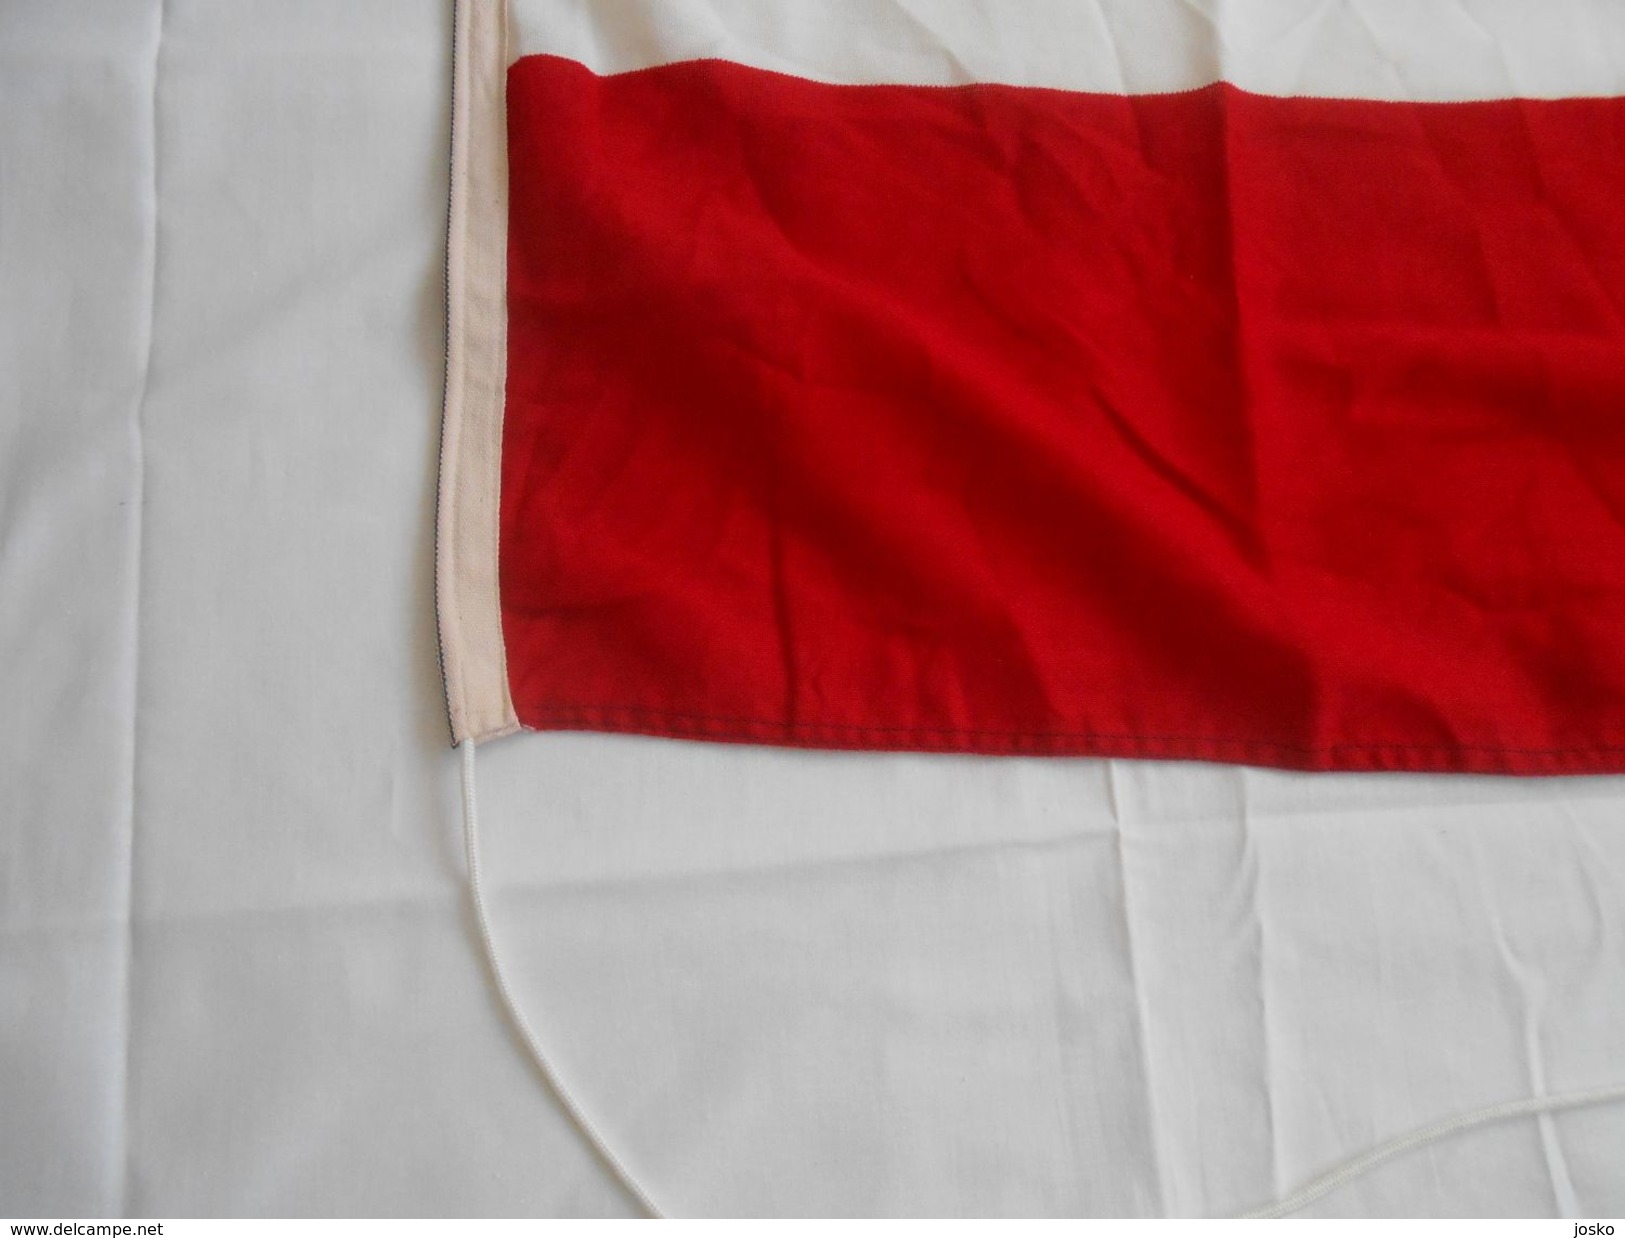 YUGOSLAVIA - Original Vintage Communist Flag * LARGER SIZE * Drapeau Flagge Bandiera Yougoslavie Jugoslawien Jugoslavia - Drapeaux